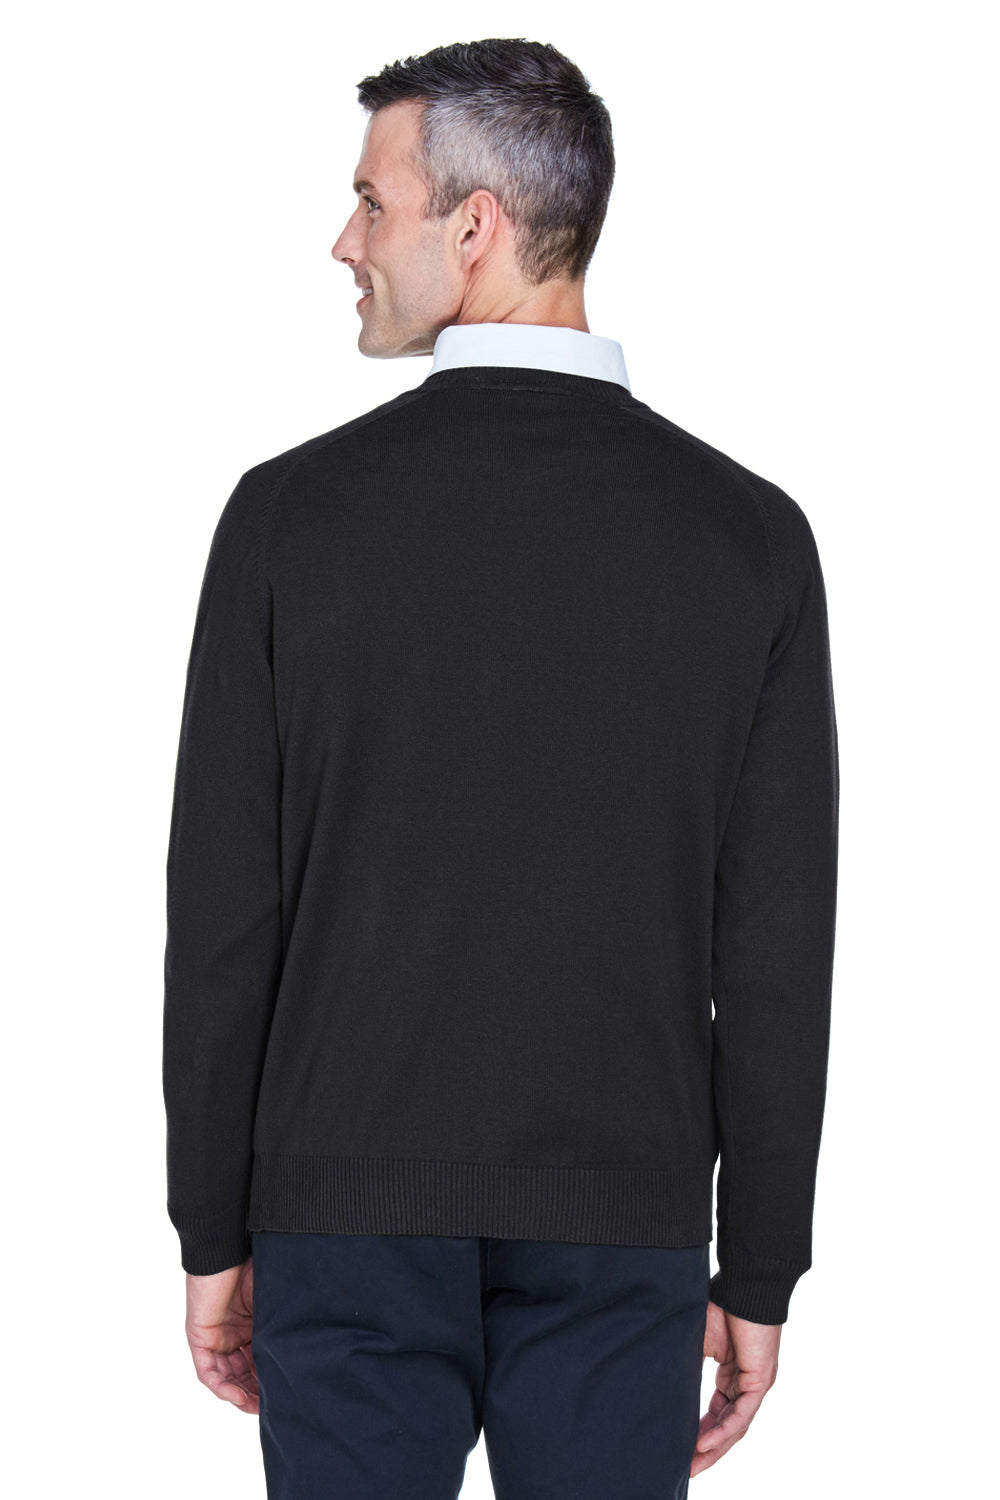 Devon & Jones D475 Mens Wrinkle Resistant V-Neck Sweater Black Back